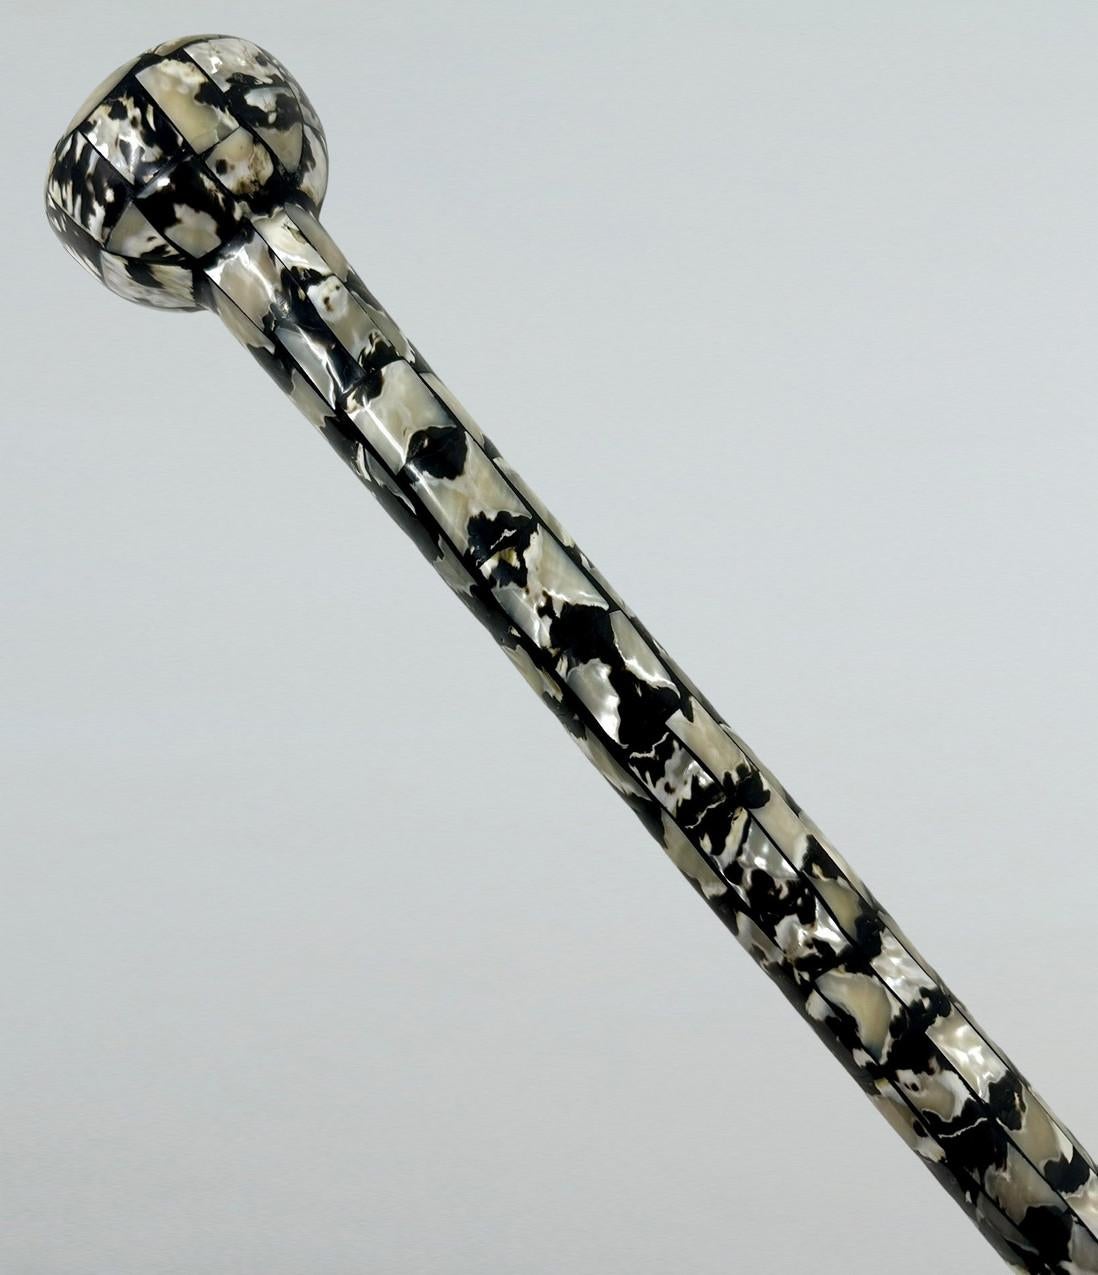 Britannique Vintage Lady's Gentleman's Mother of Pearl Traveling Walking Swagger Stick Cane  en vente